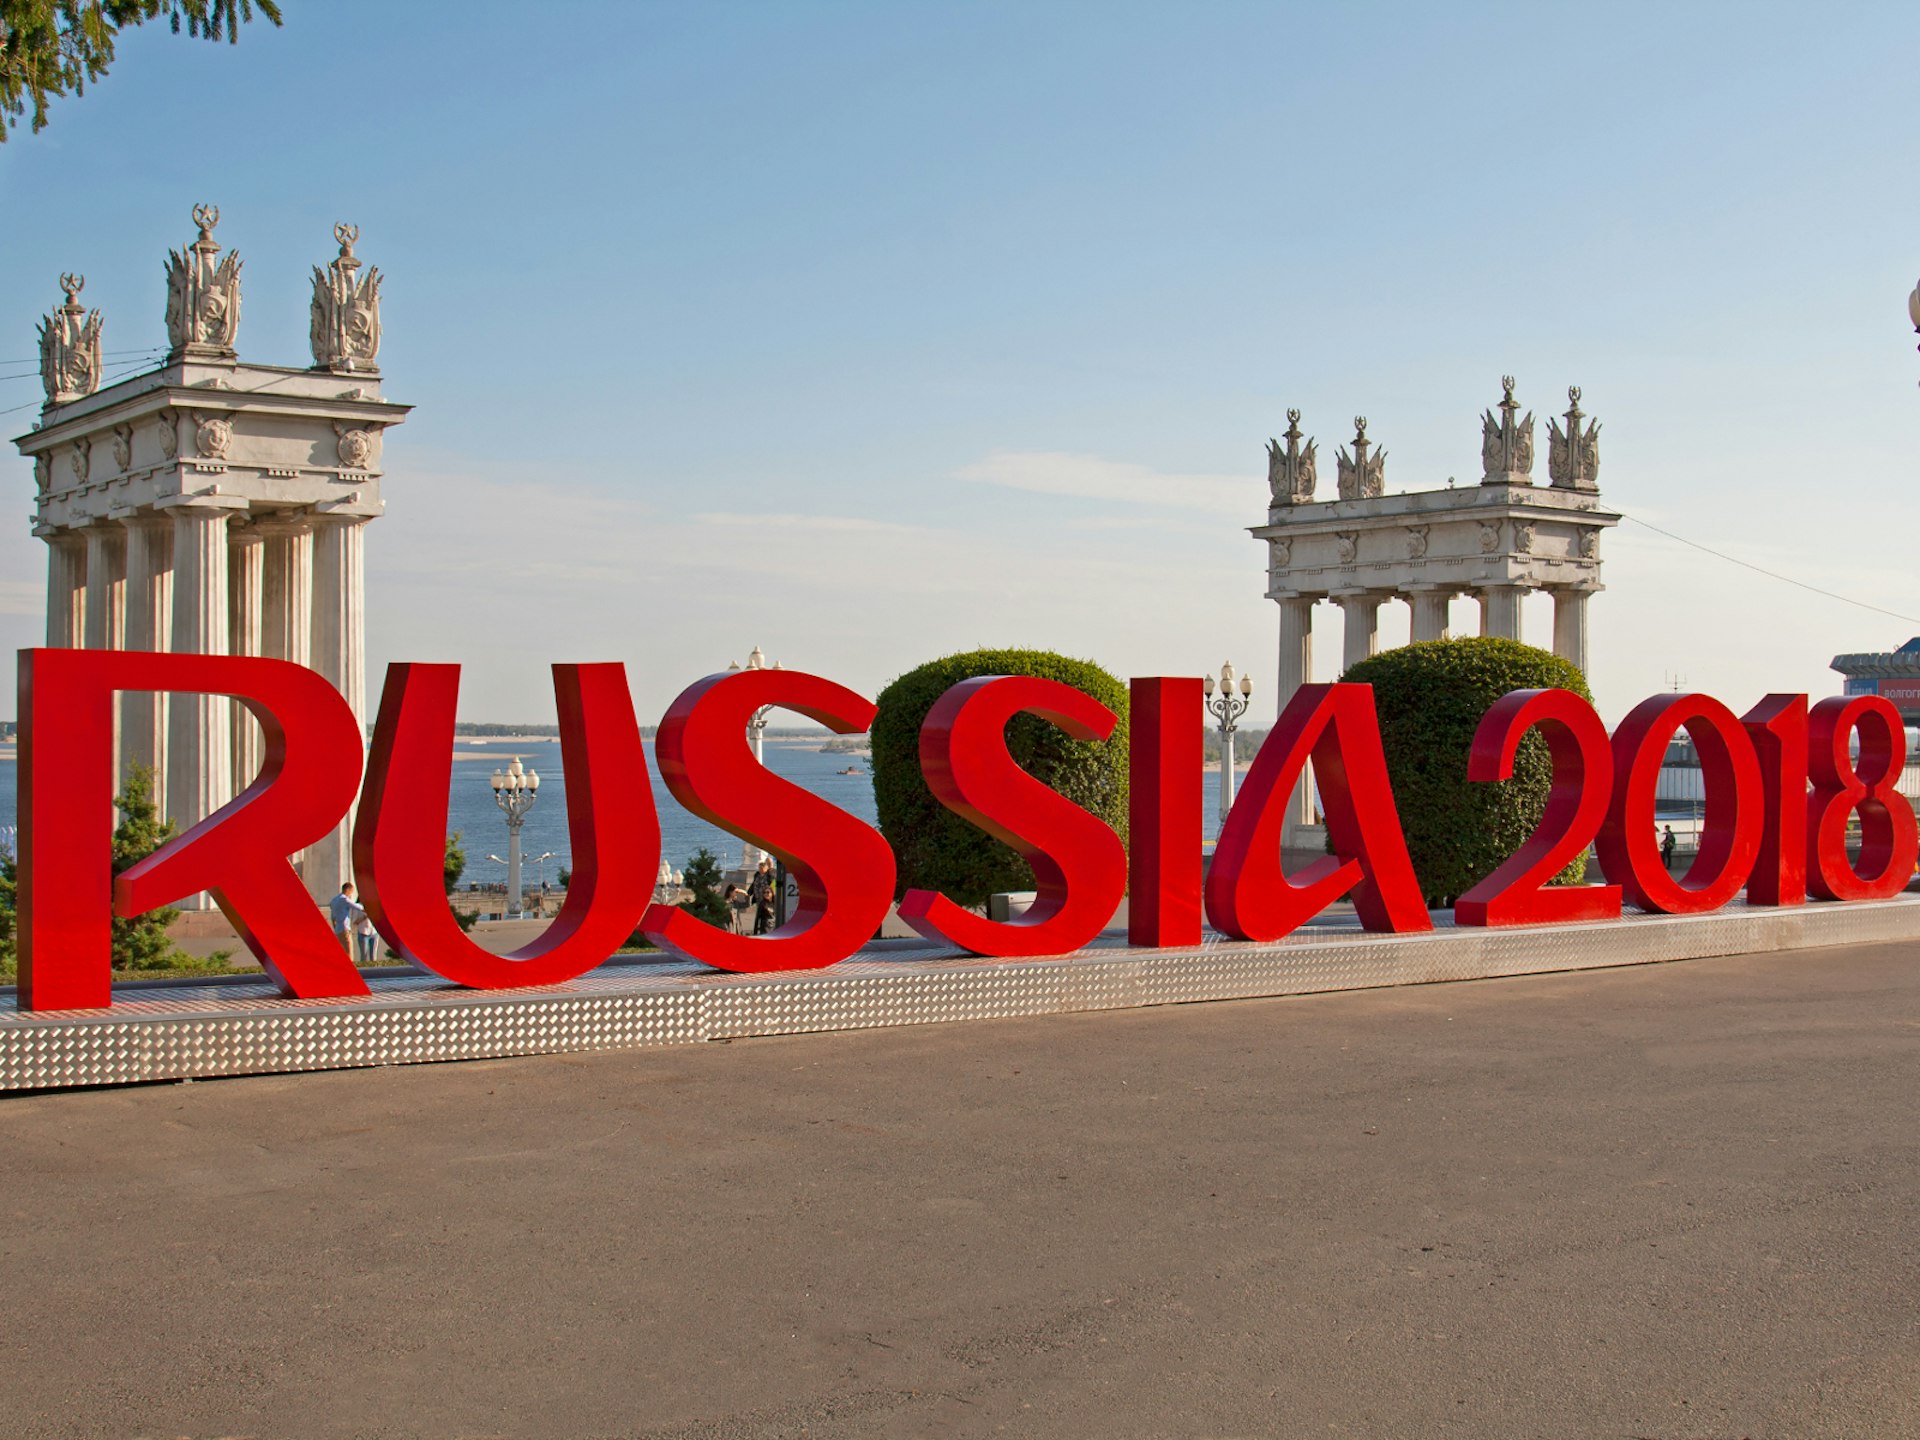 The sign announcing the 2018 FIFA World Cup at Volgograd's central promenade © Iuliia Oleinik / Shutterstock